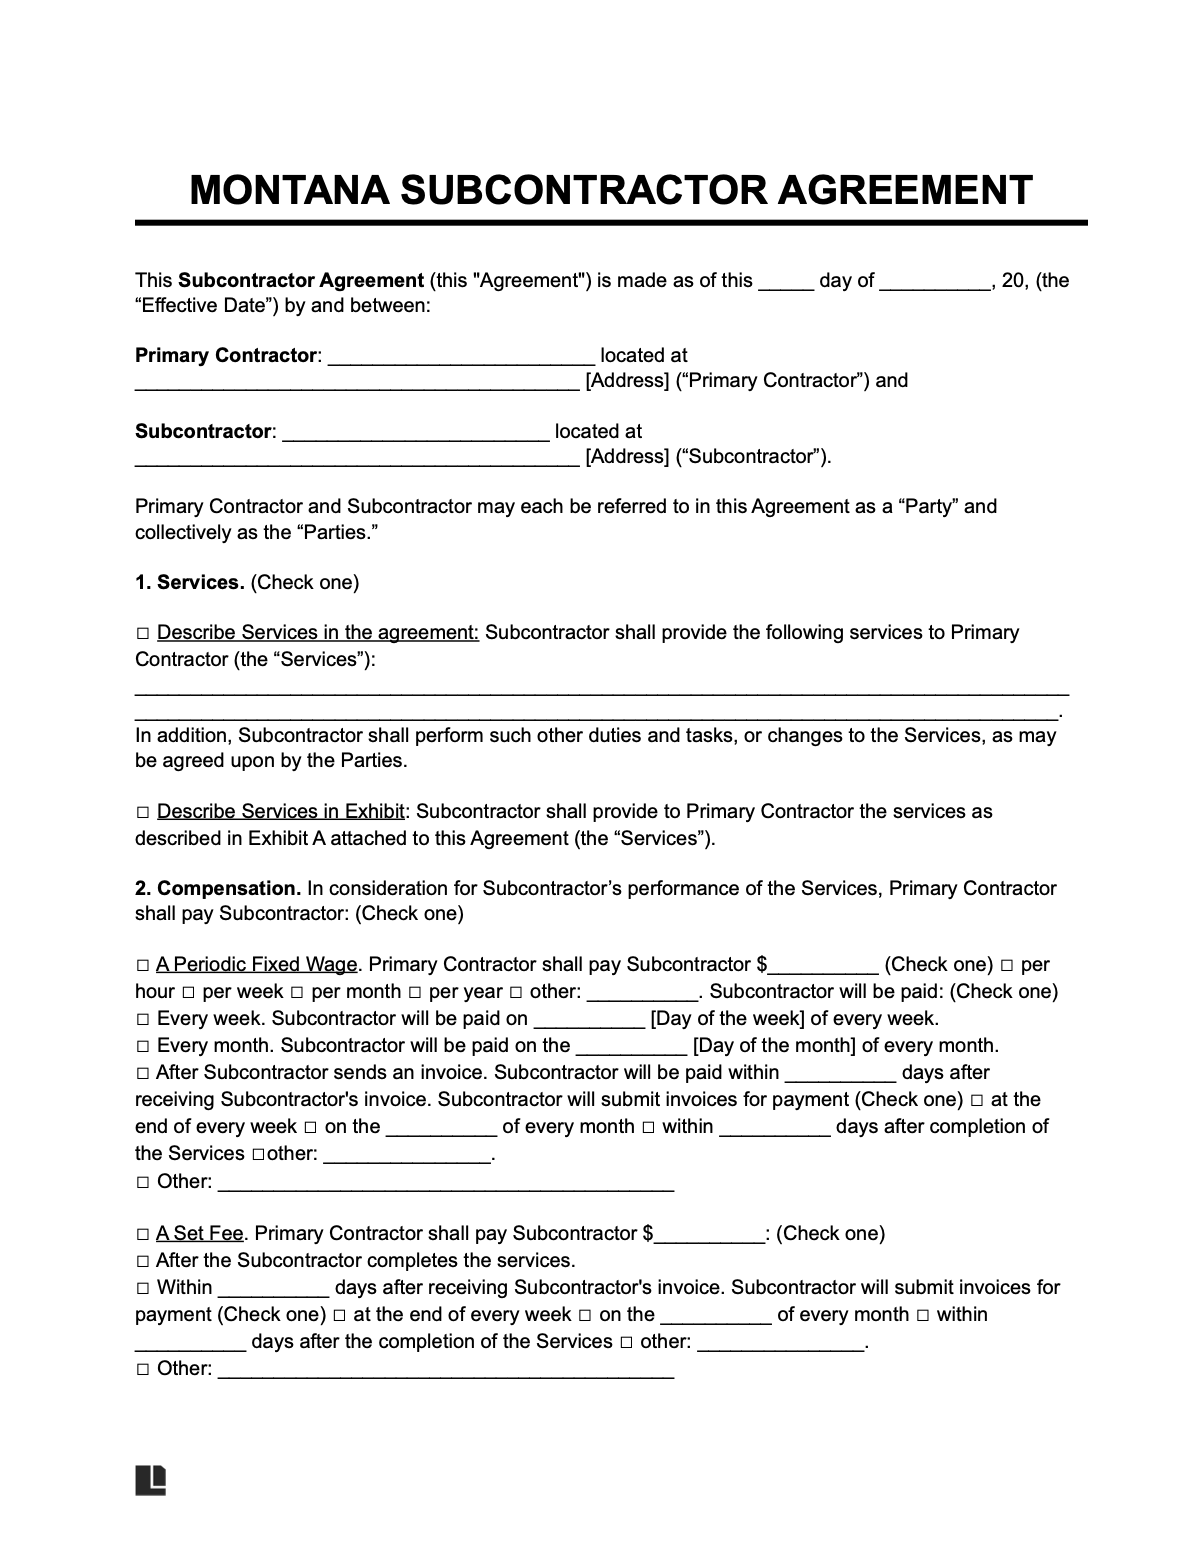 montana subcontractor agreement template